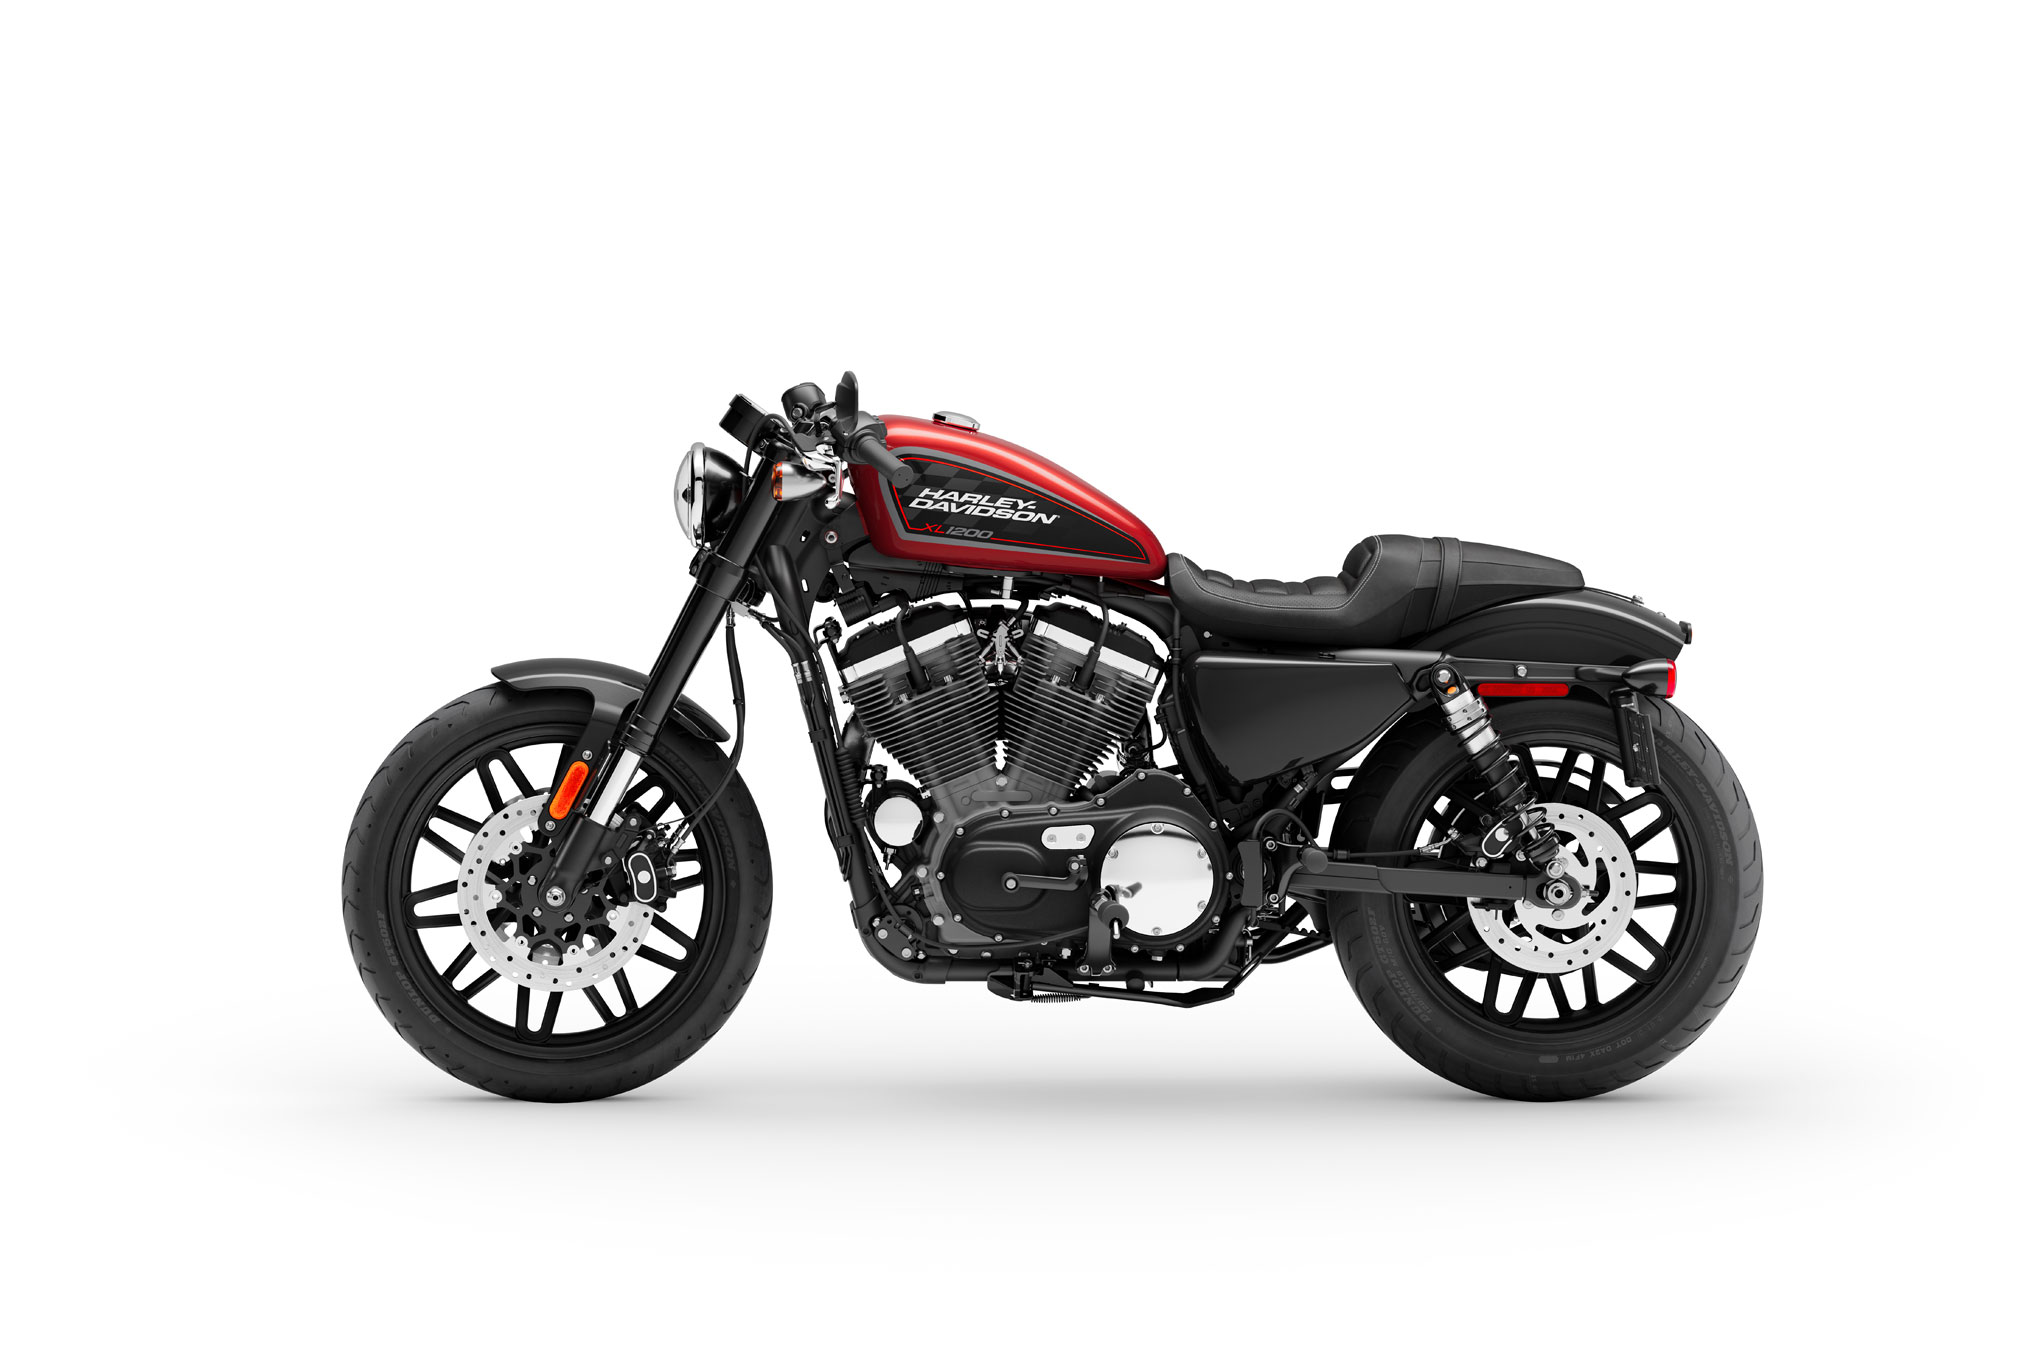 2020 Harley Davidson Roadster Guide Total Motorcycle